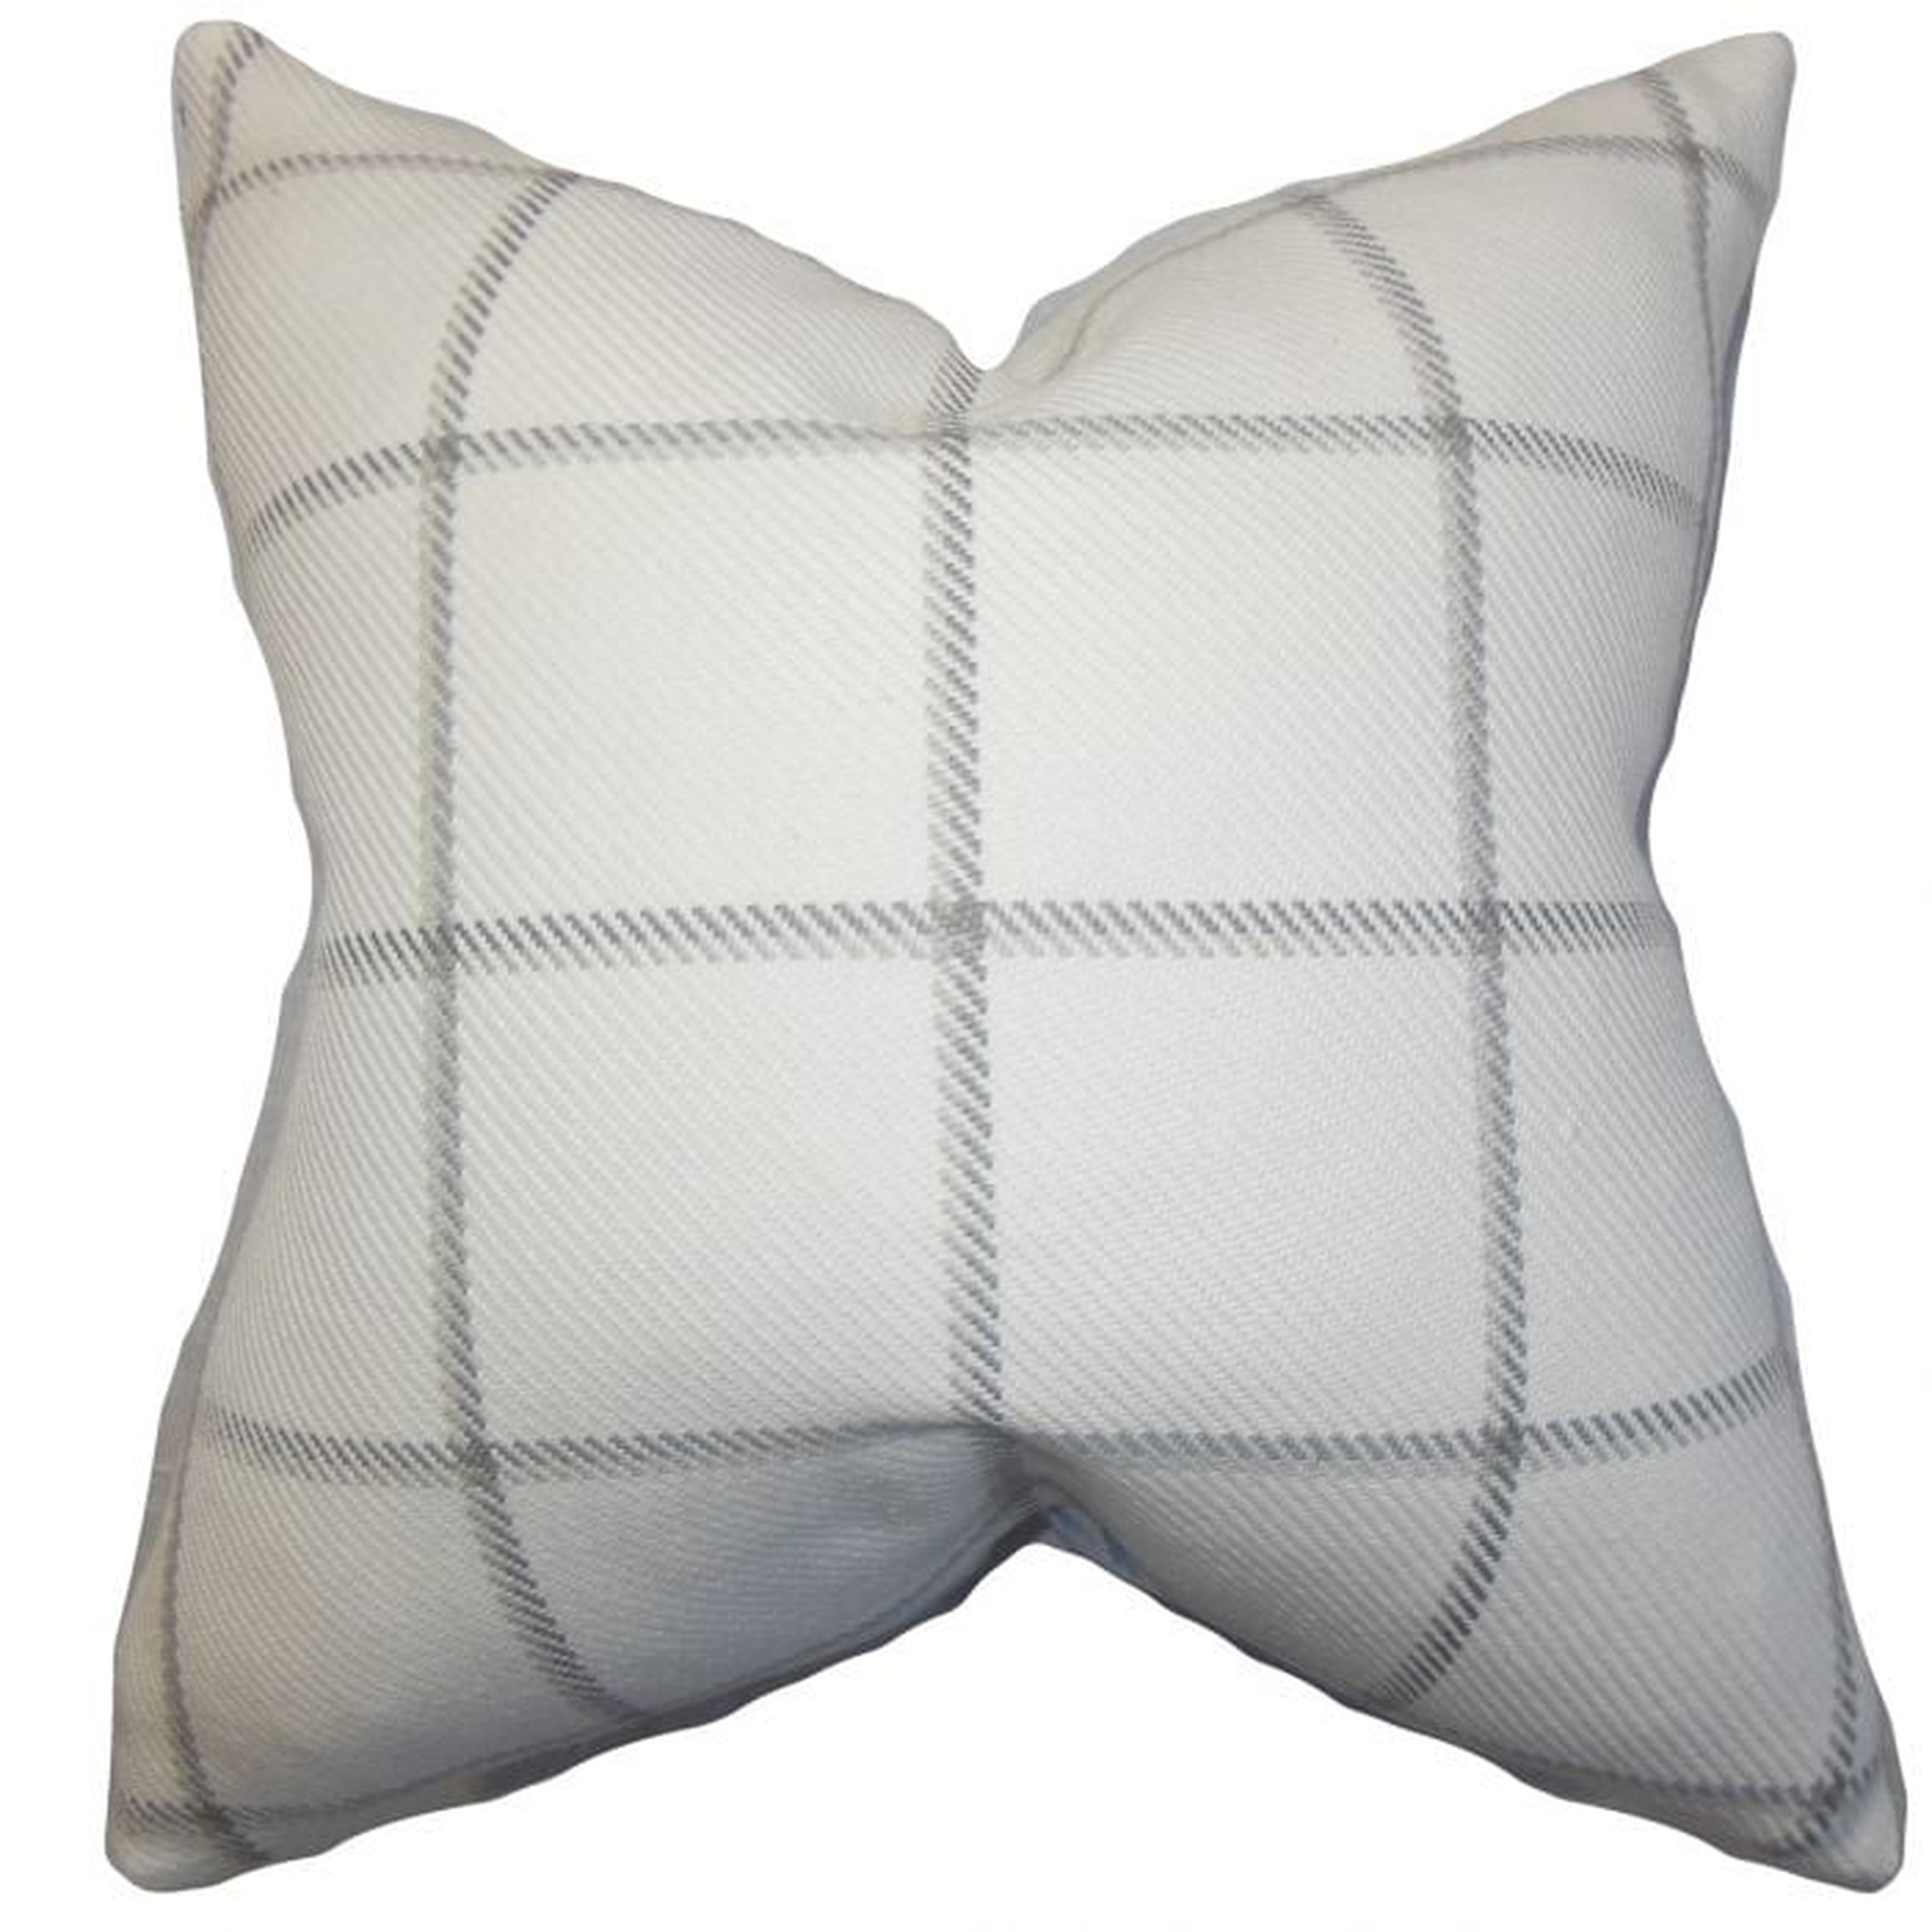 Wilmie Plaid Pillow, Gray & White, 18" x 18" - Linen & Seam